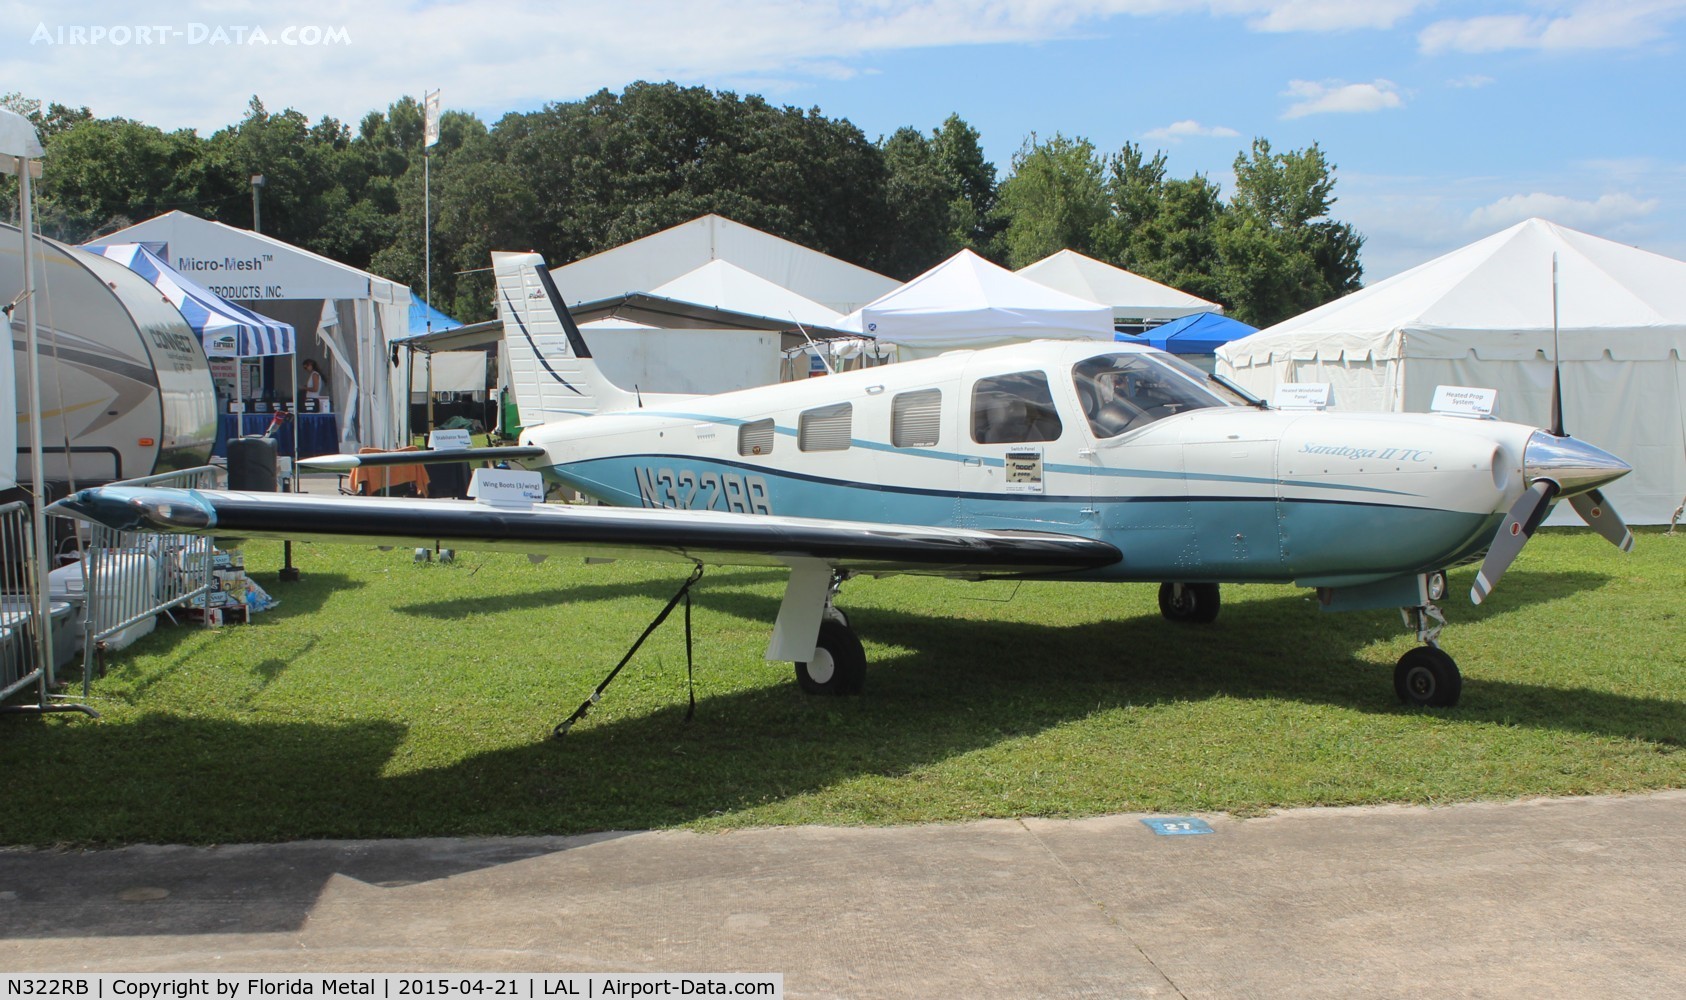 N322RB, 2002 Piper PA-32R-301T Turbo Saratoga C/N 3257306, PA-32R-301T